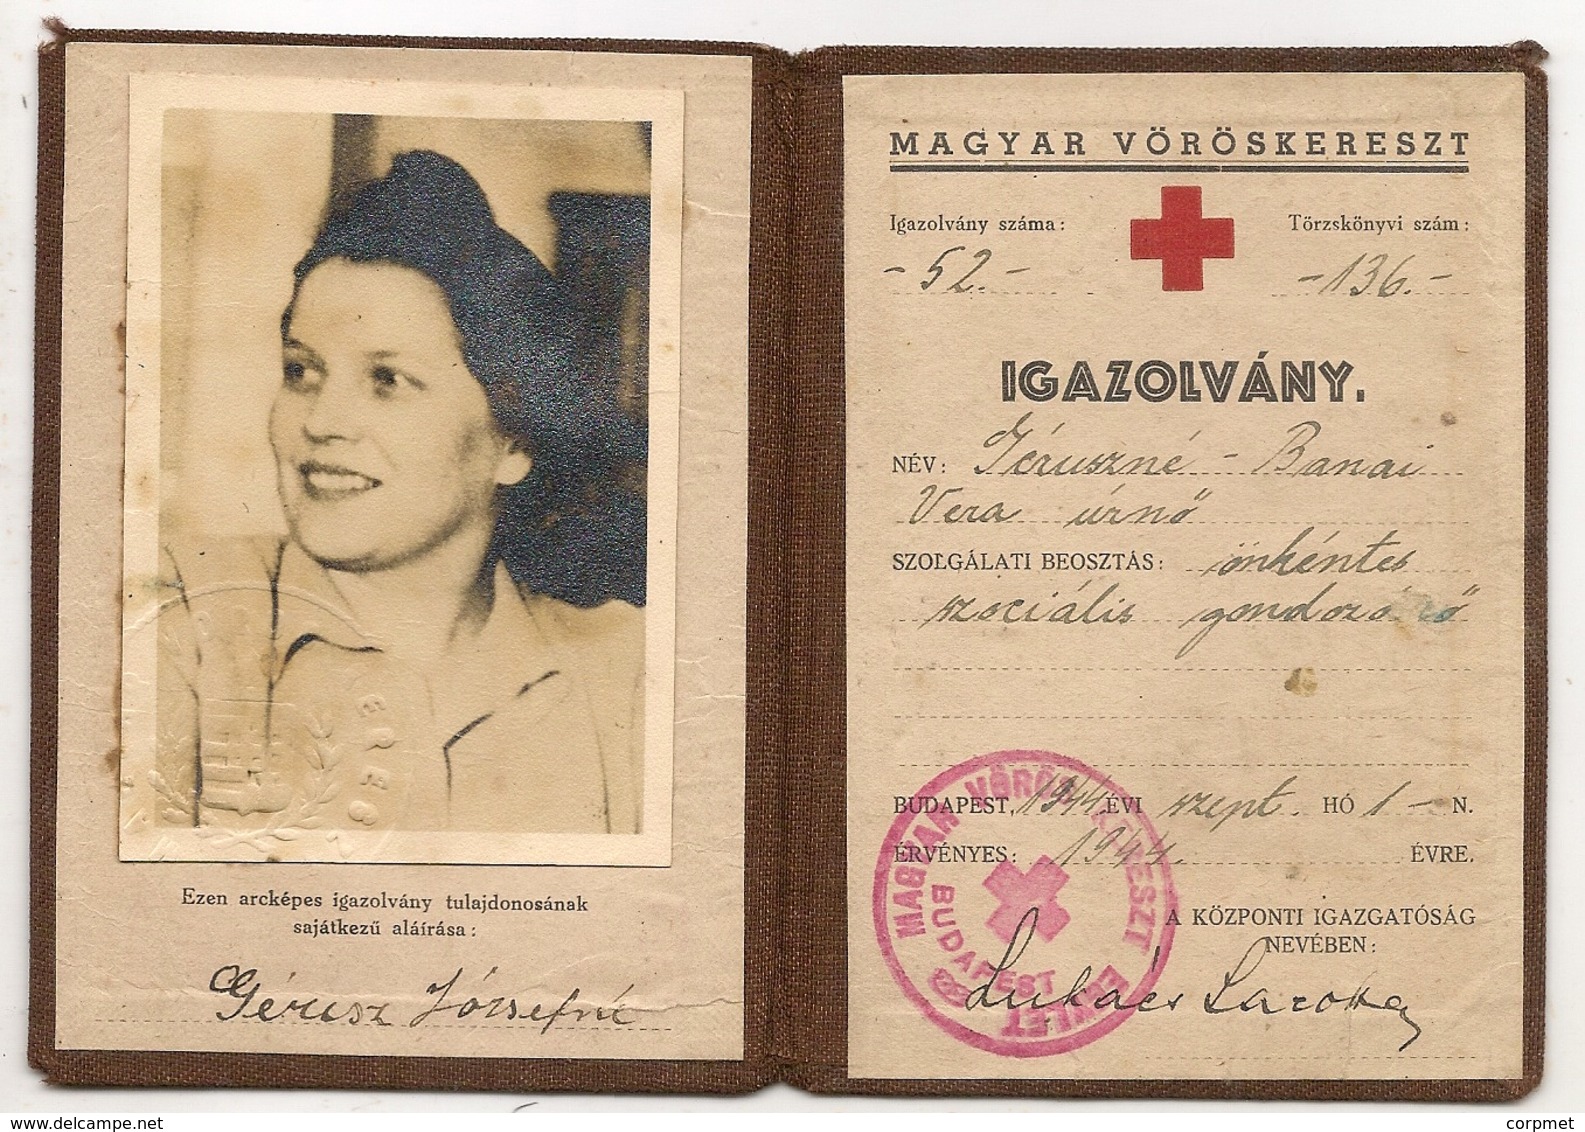 WW2 - Rare RED CROSS 1944 MEMBER DOCUMENT For HUNGARY RED CROSS On Occupied Hungary - Historical Documents